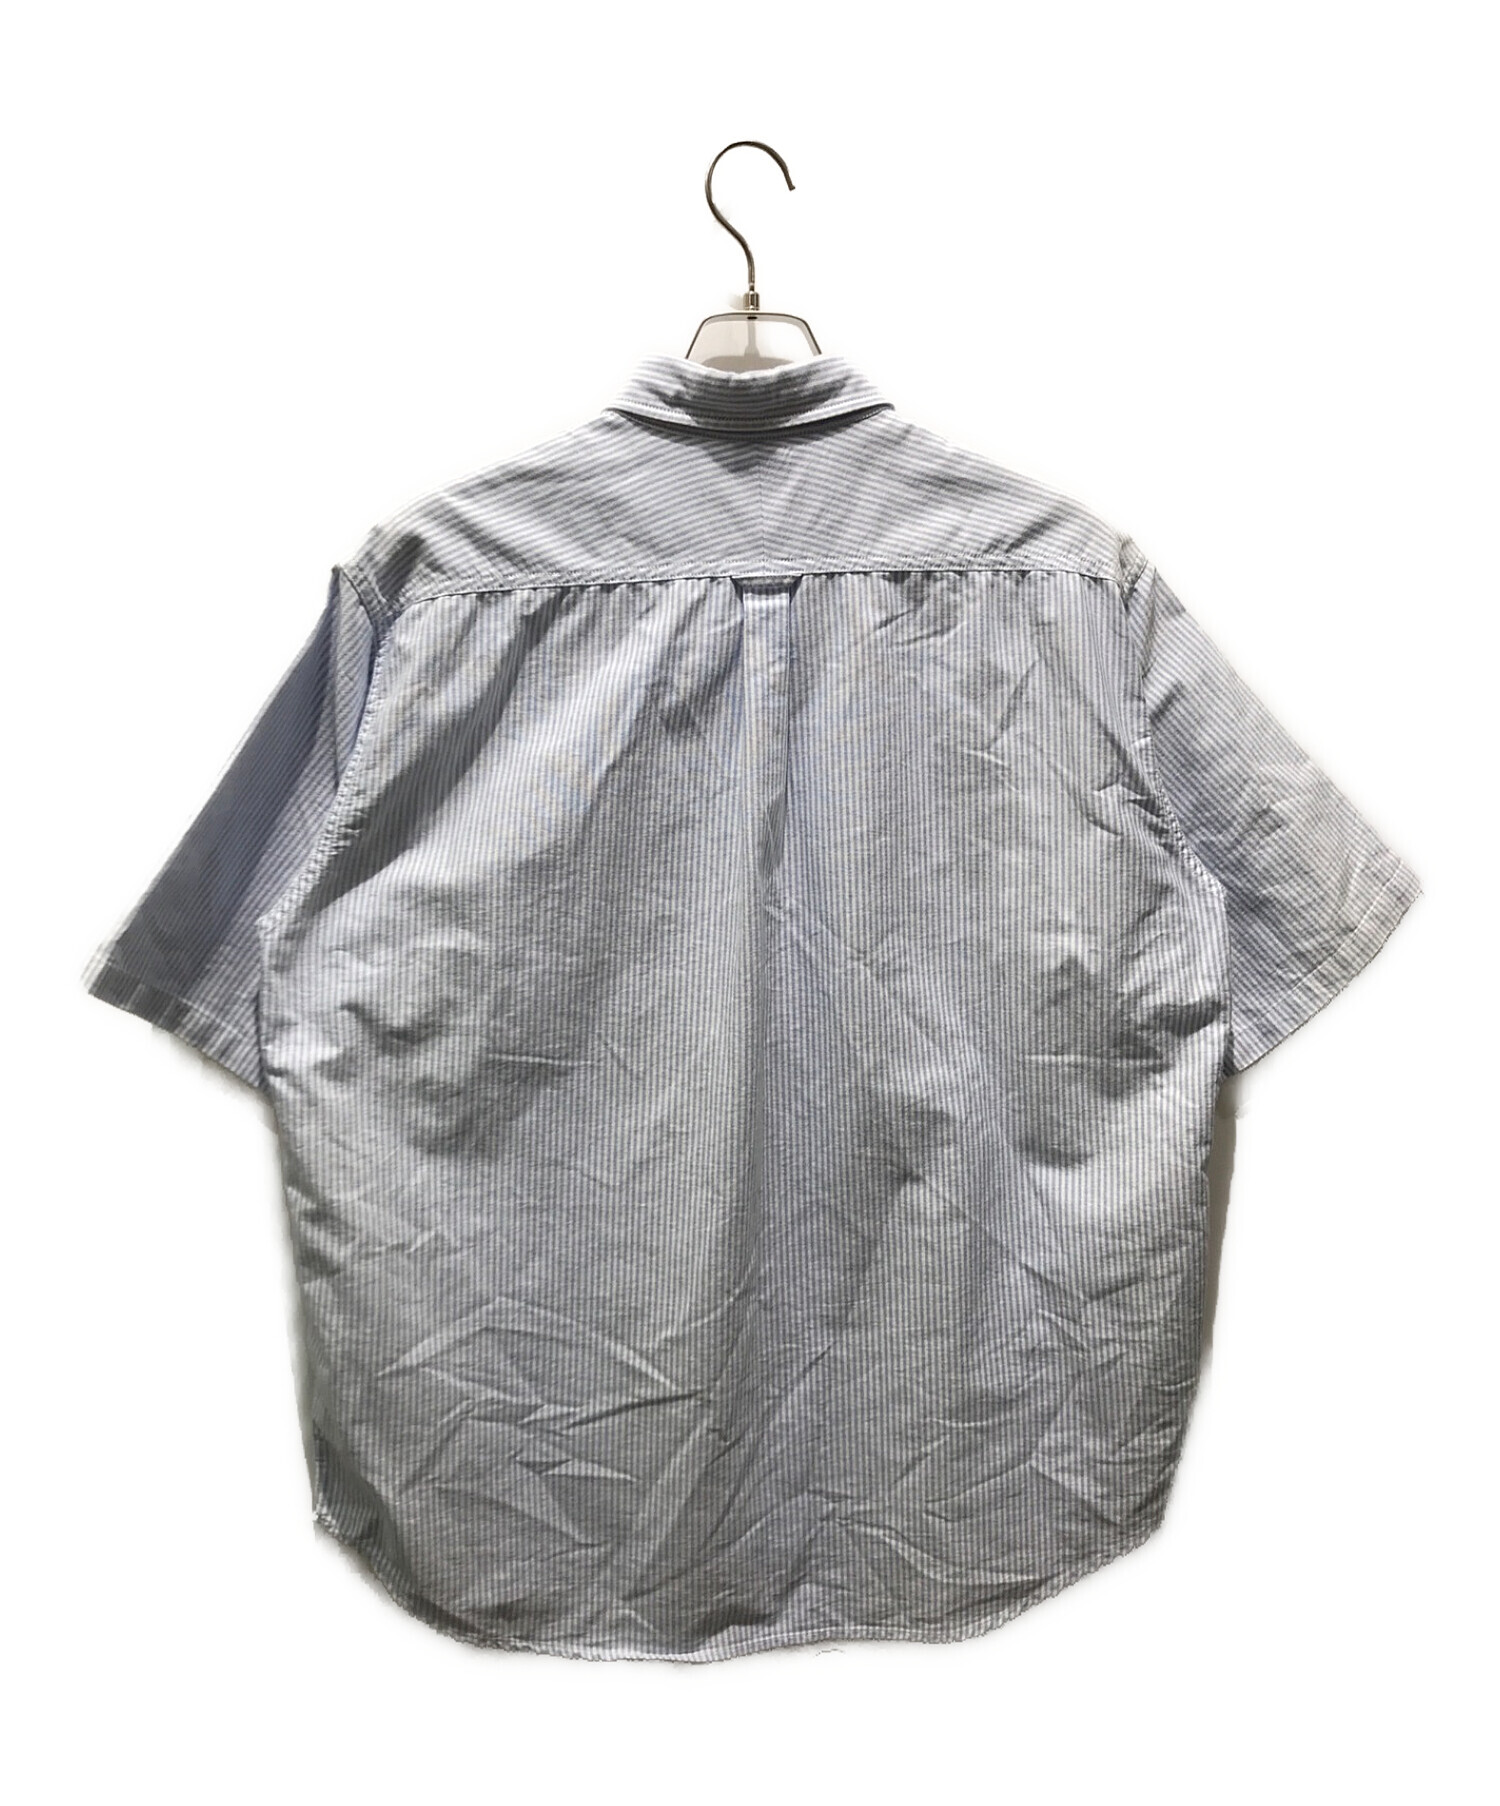 THE NORTHFACE PURPLELABEL (ザ・ノースフェイス パープルレーベル) Stripe OX B.D. Big H/S Shirt　 NT3111N ブルー サイズ:M